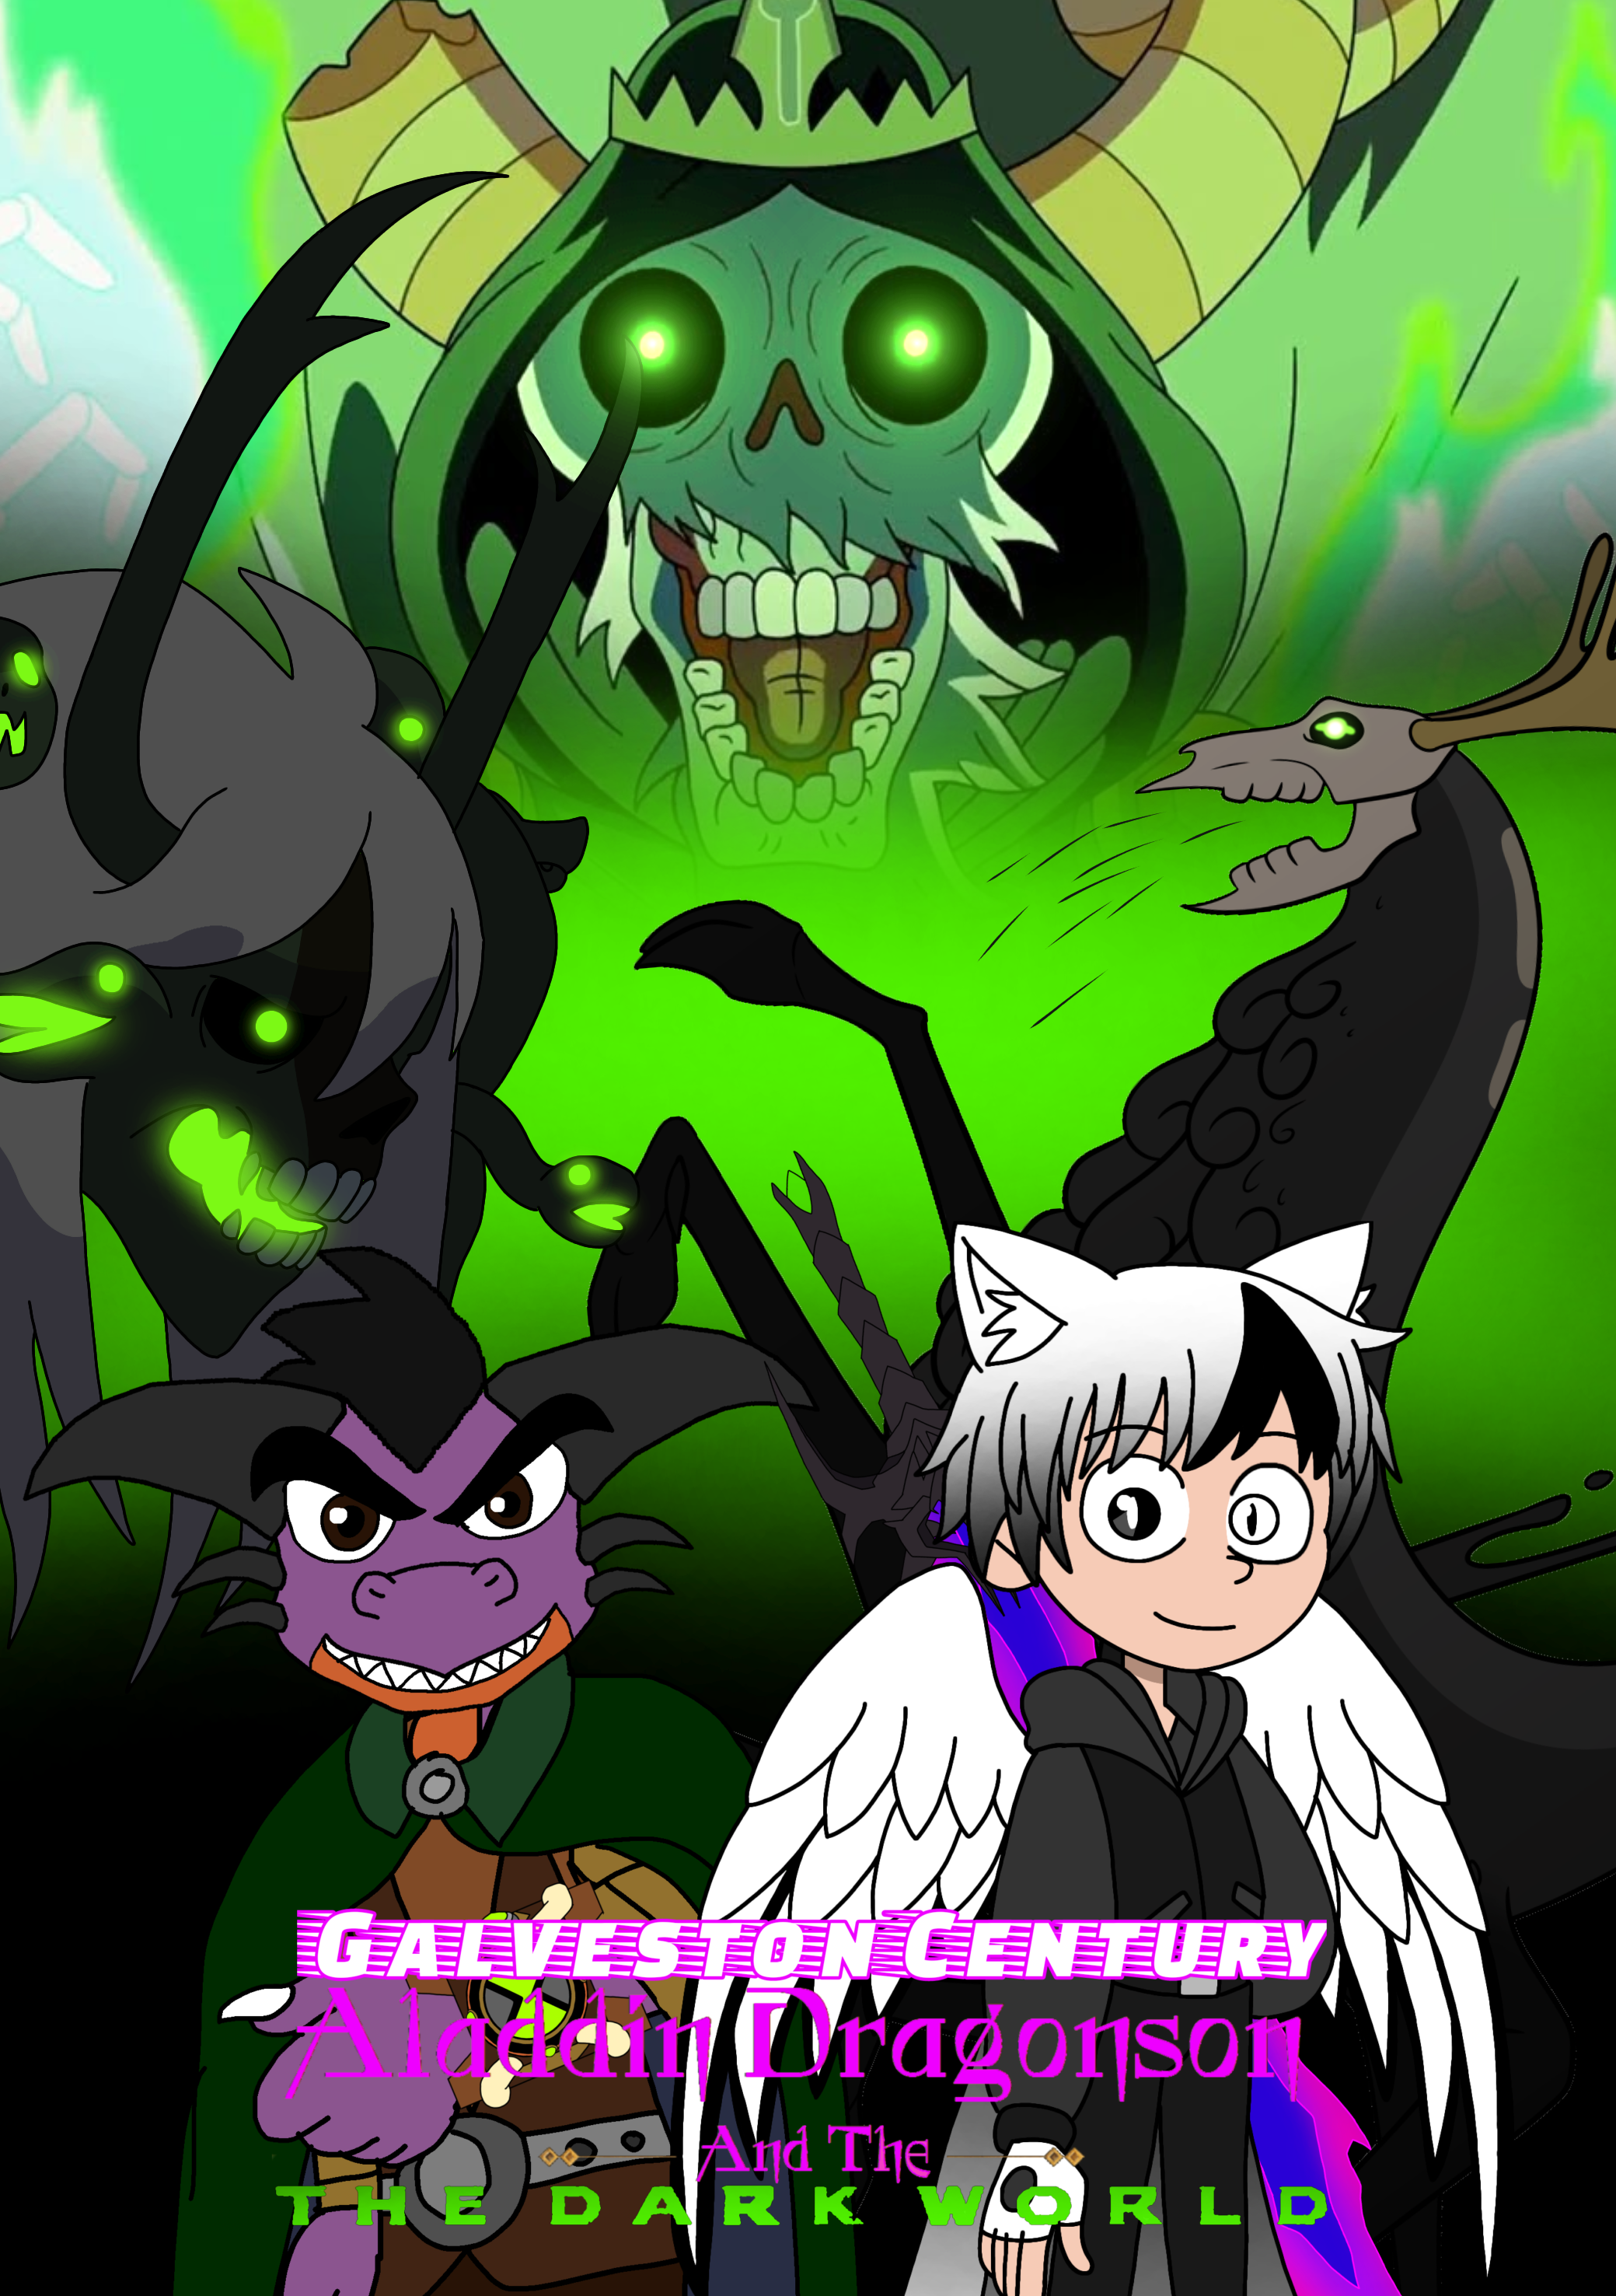 The Owl House Dragons Season 2 Poster by gcjdfkjbrfguithgiuht on DeviantArt